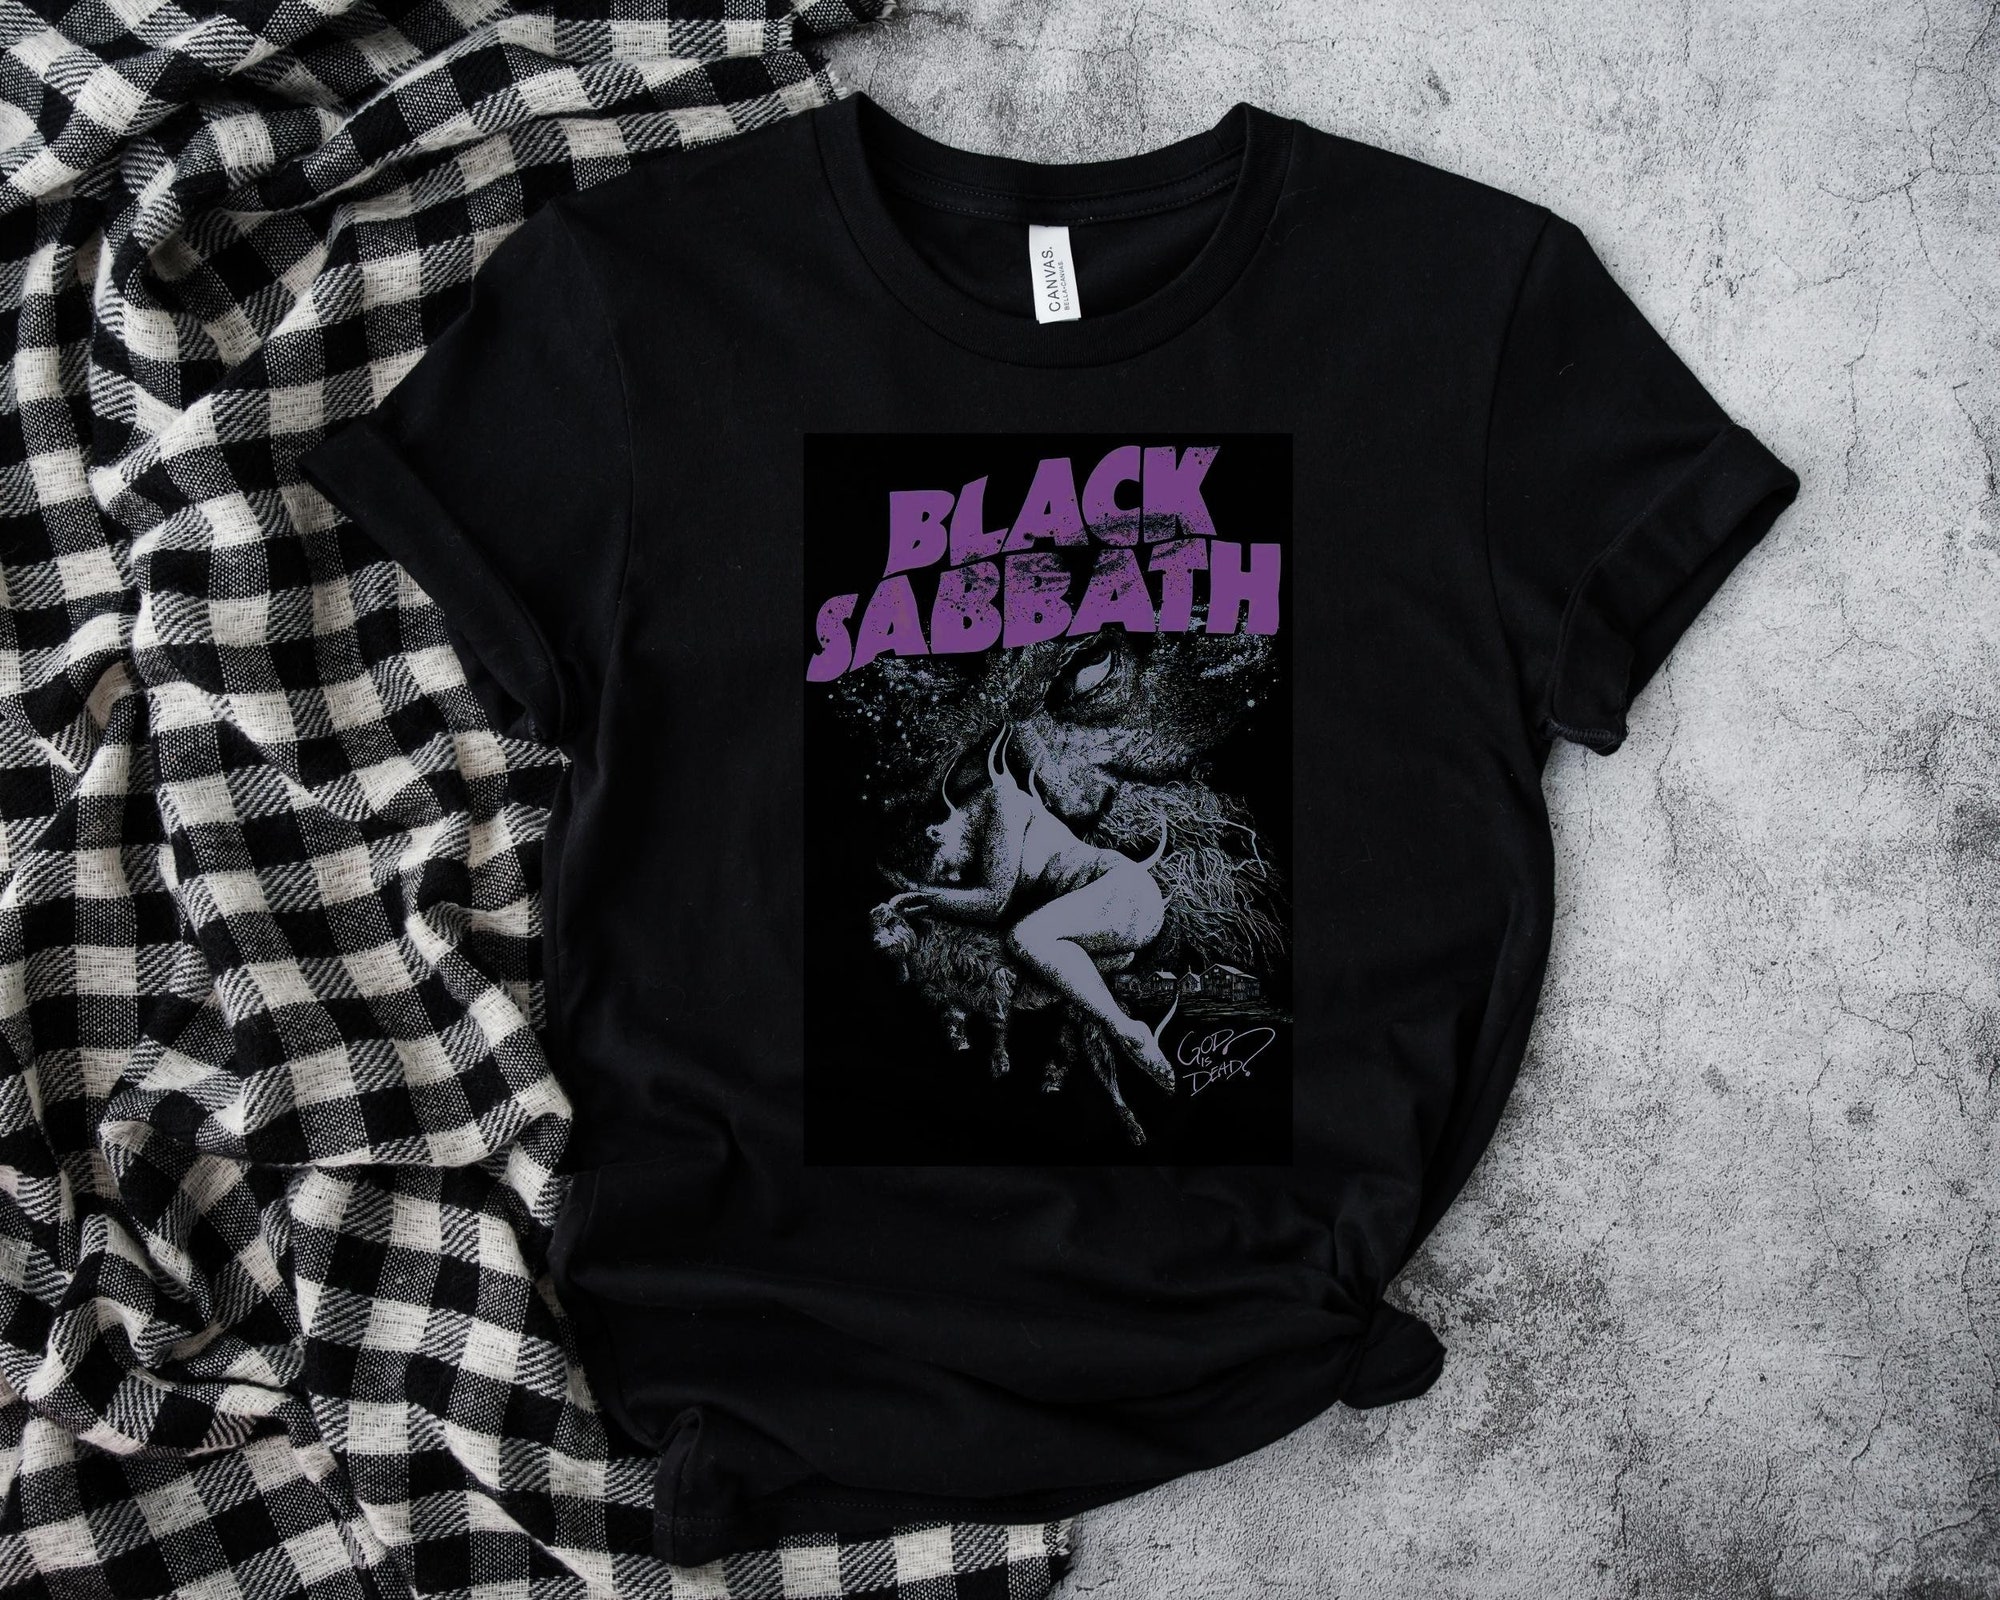 Discover BLACK SABBATH - Graphic Tshirt, Rock Band Shirt